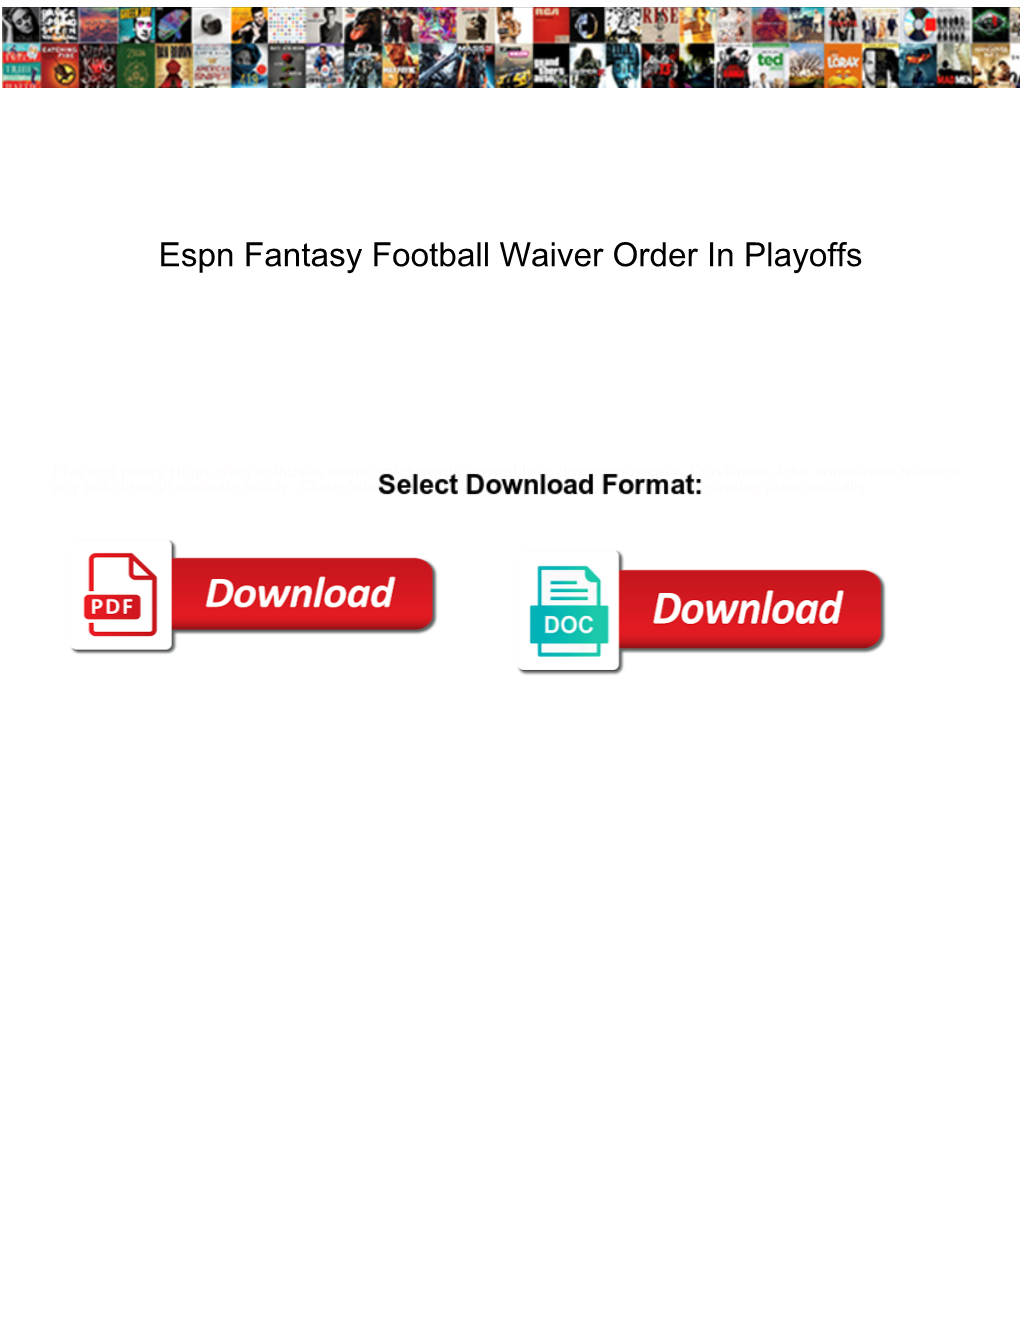 Espn Fantasy Football Waiver Order in Playoffs